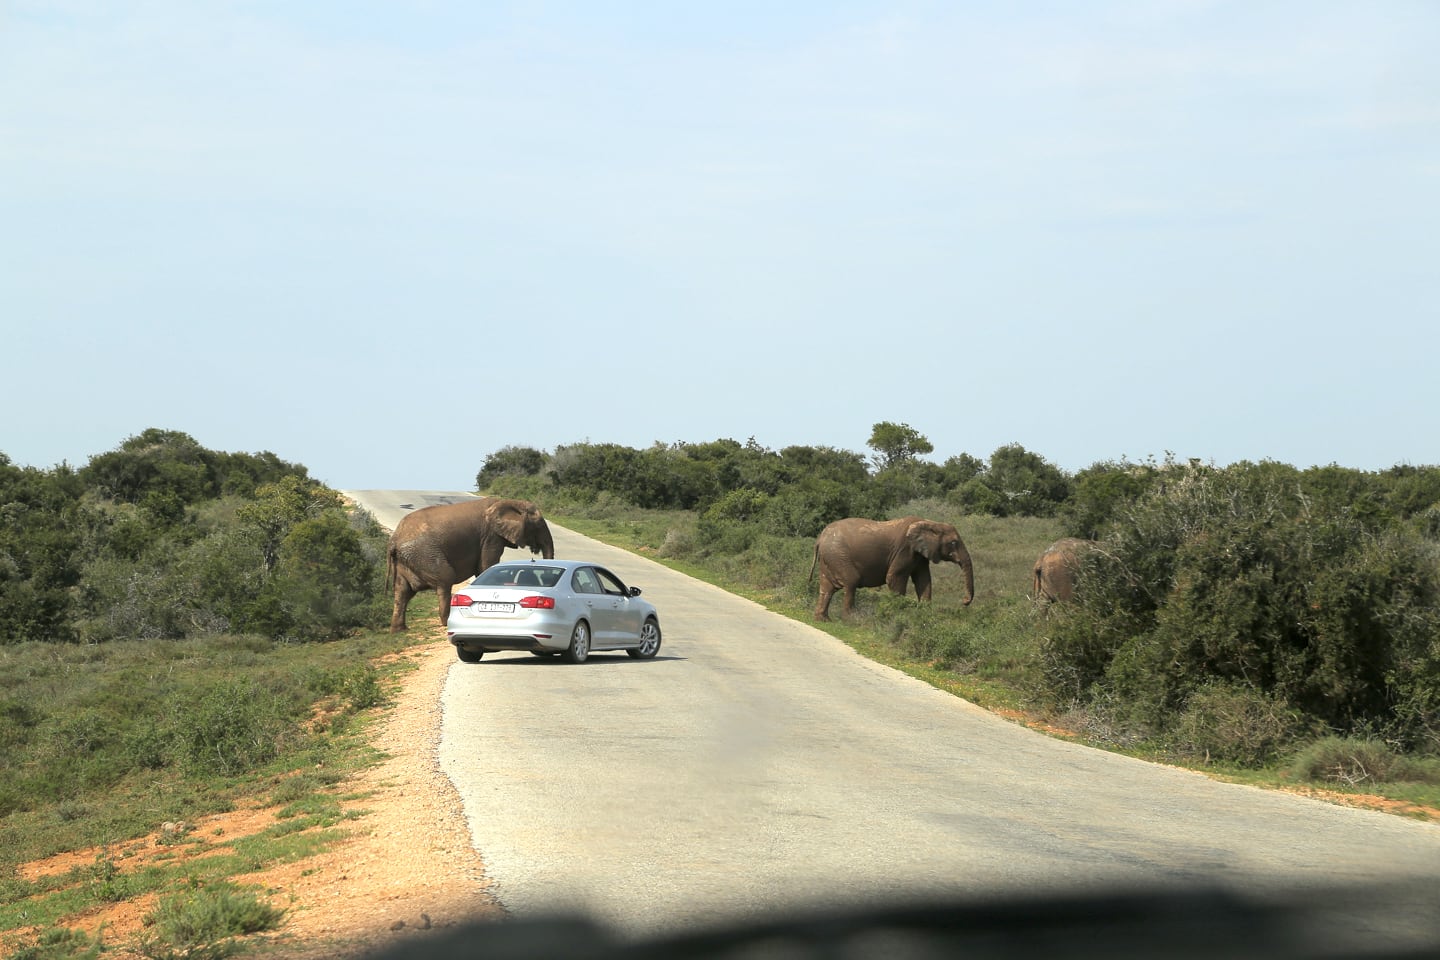 elephant encounter at Addo Elephant National Park